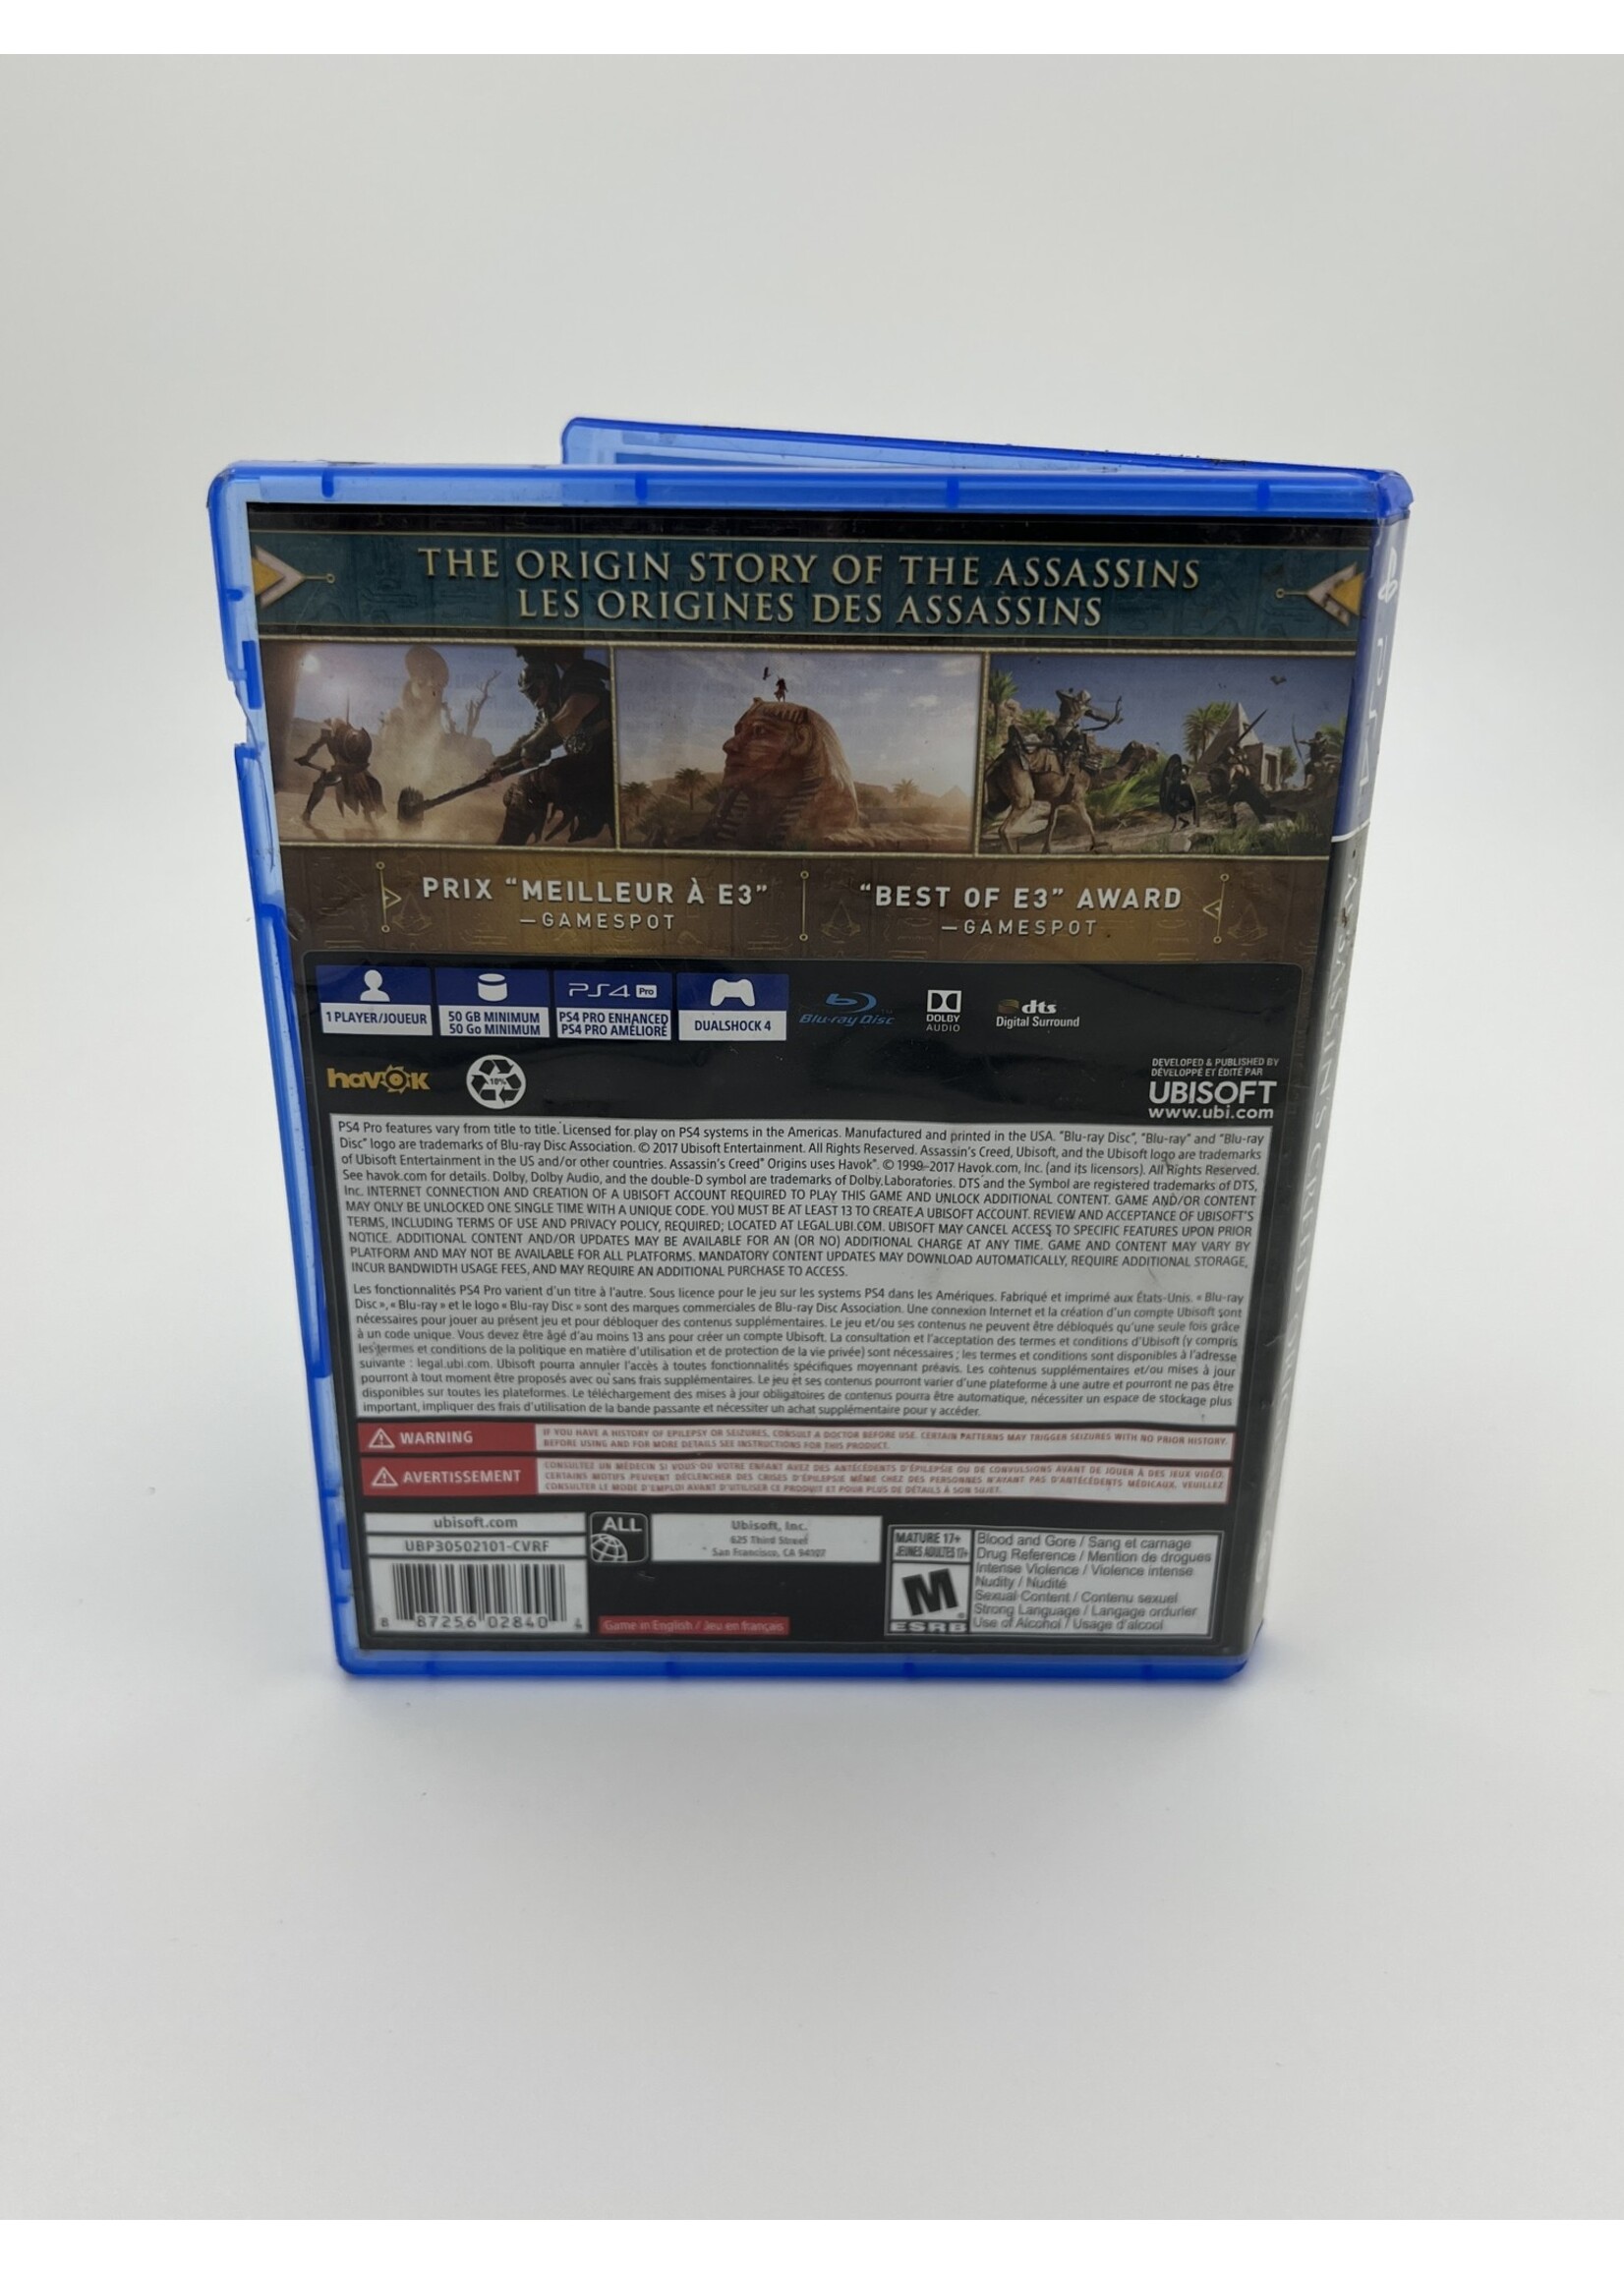 Sony   Assassins Creed Origins PS4